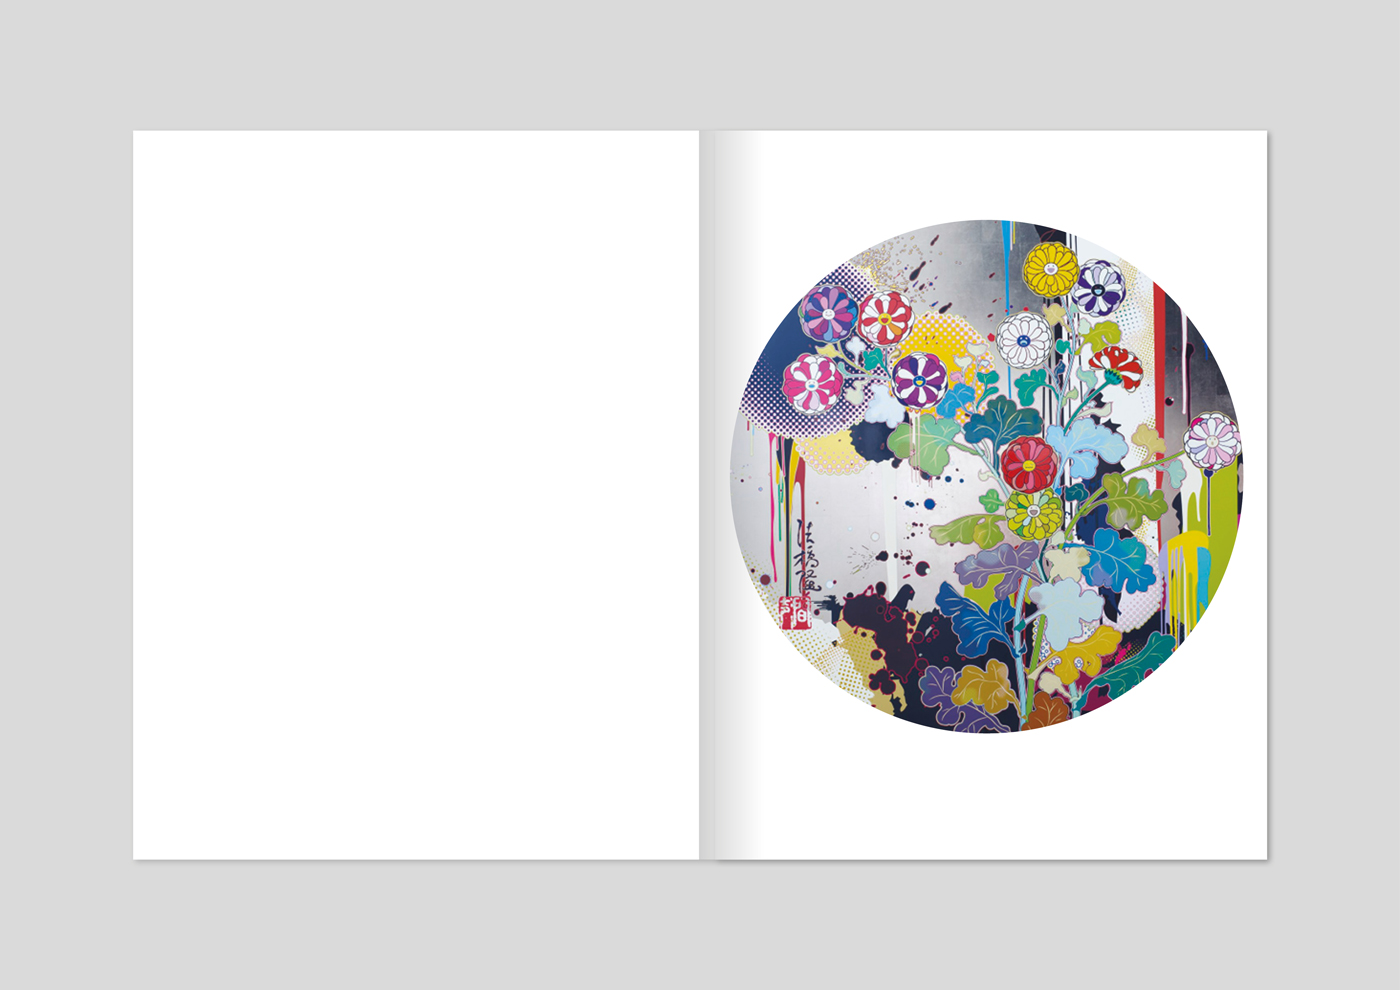 Takashi Murakami – Exhibition catalogue